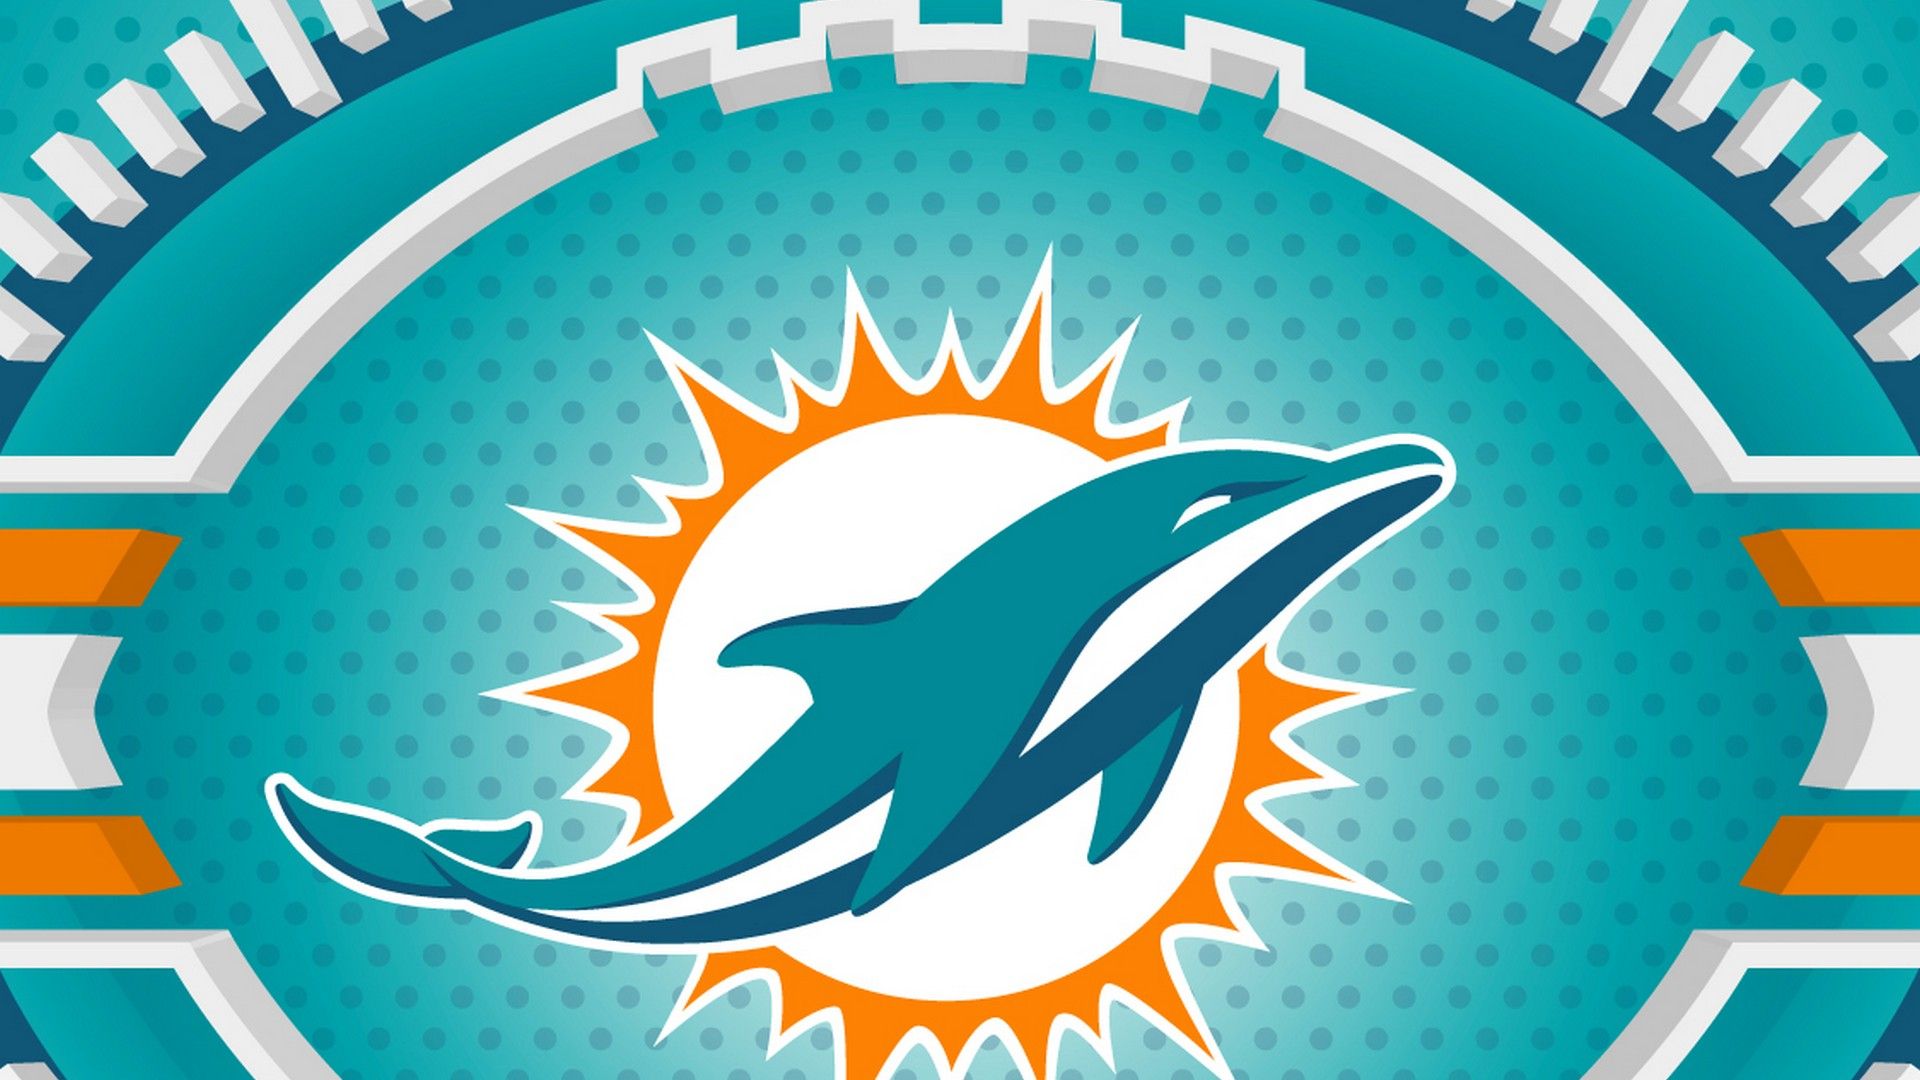 Miami Dolphins Desktop Wallpaper NFL Football Wallpaper. Miami dolphins wallpaper, Nfl football wallpaper, Miami dolphins